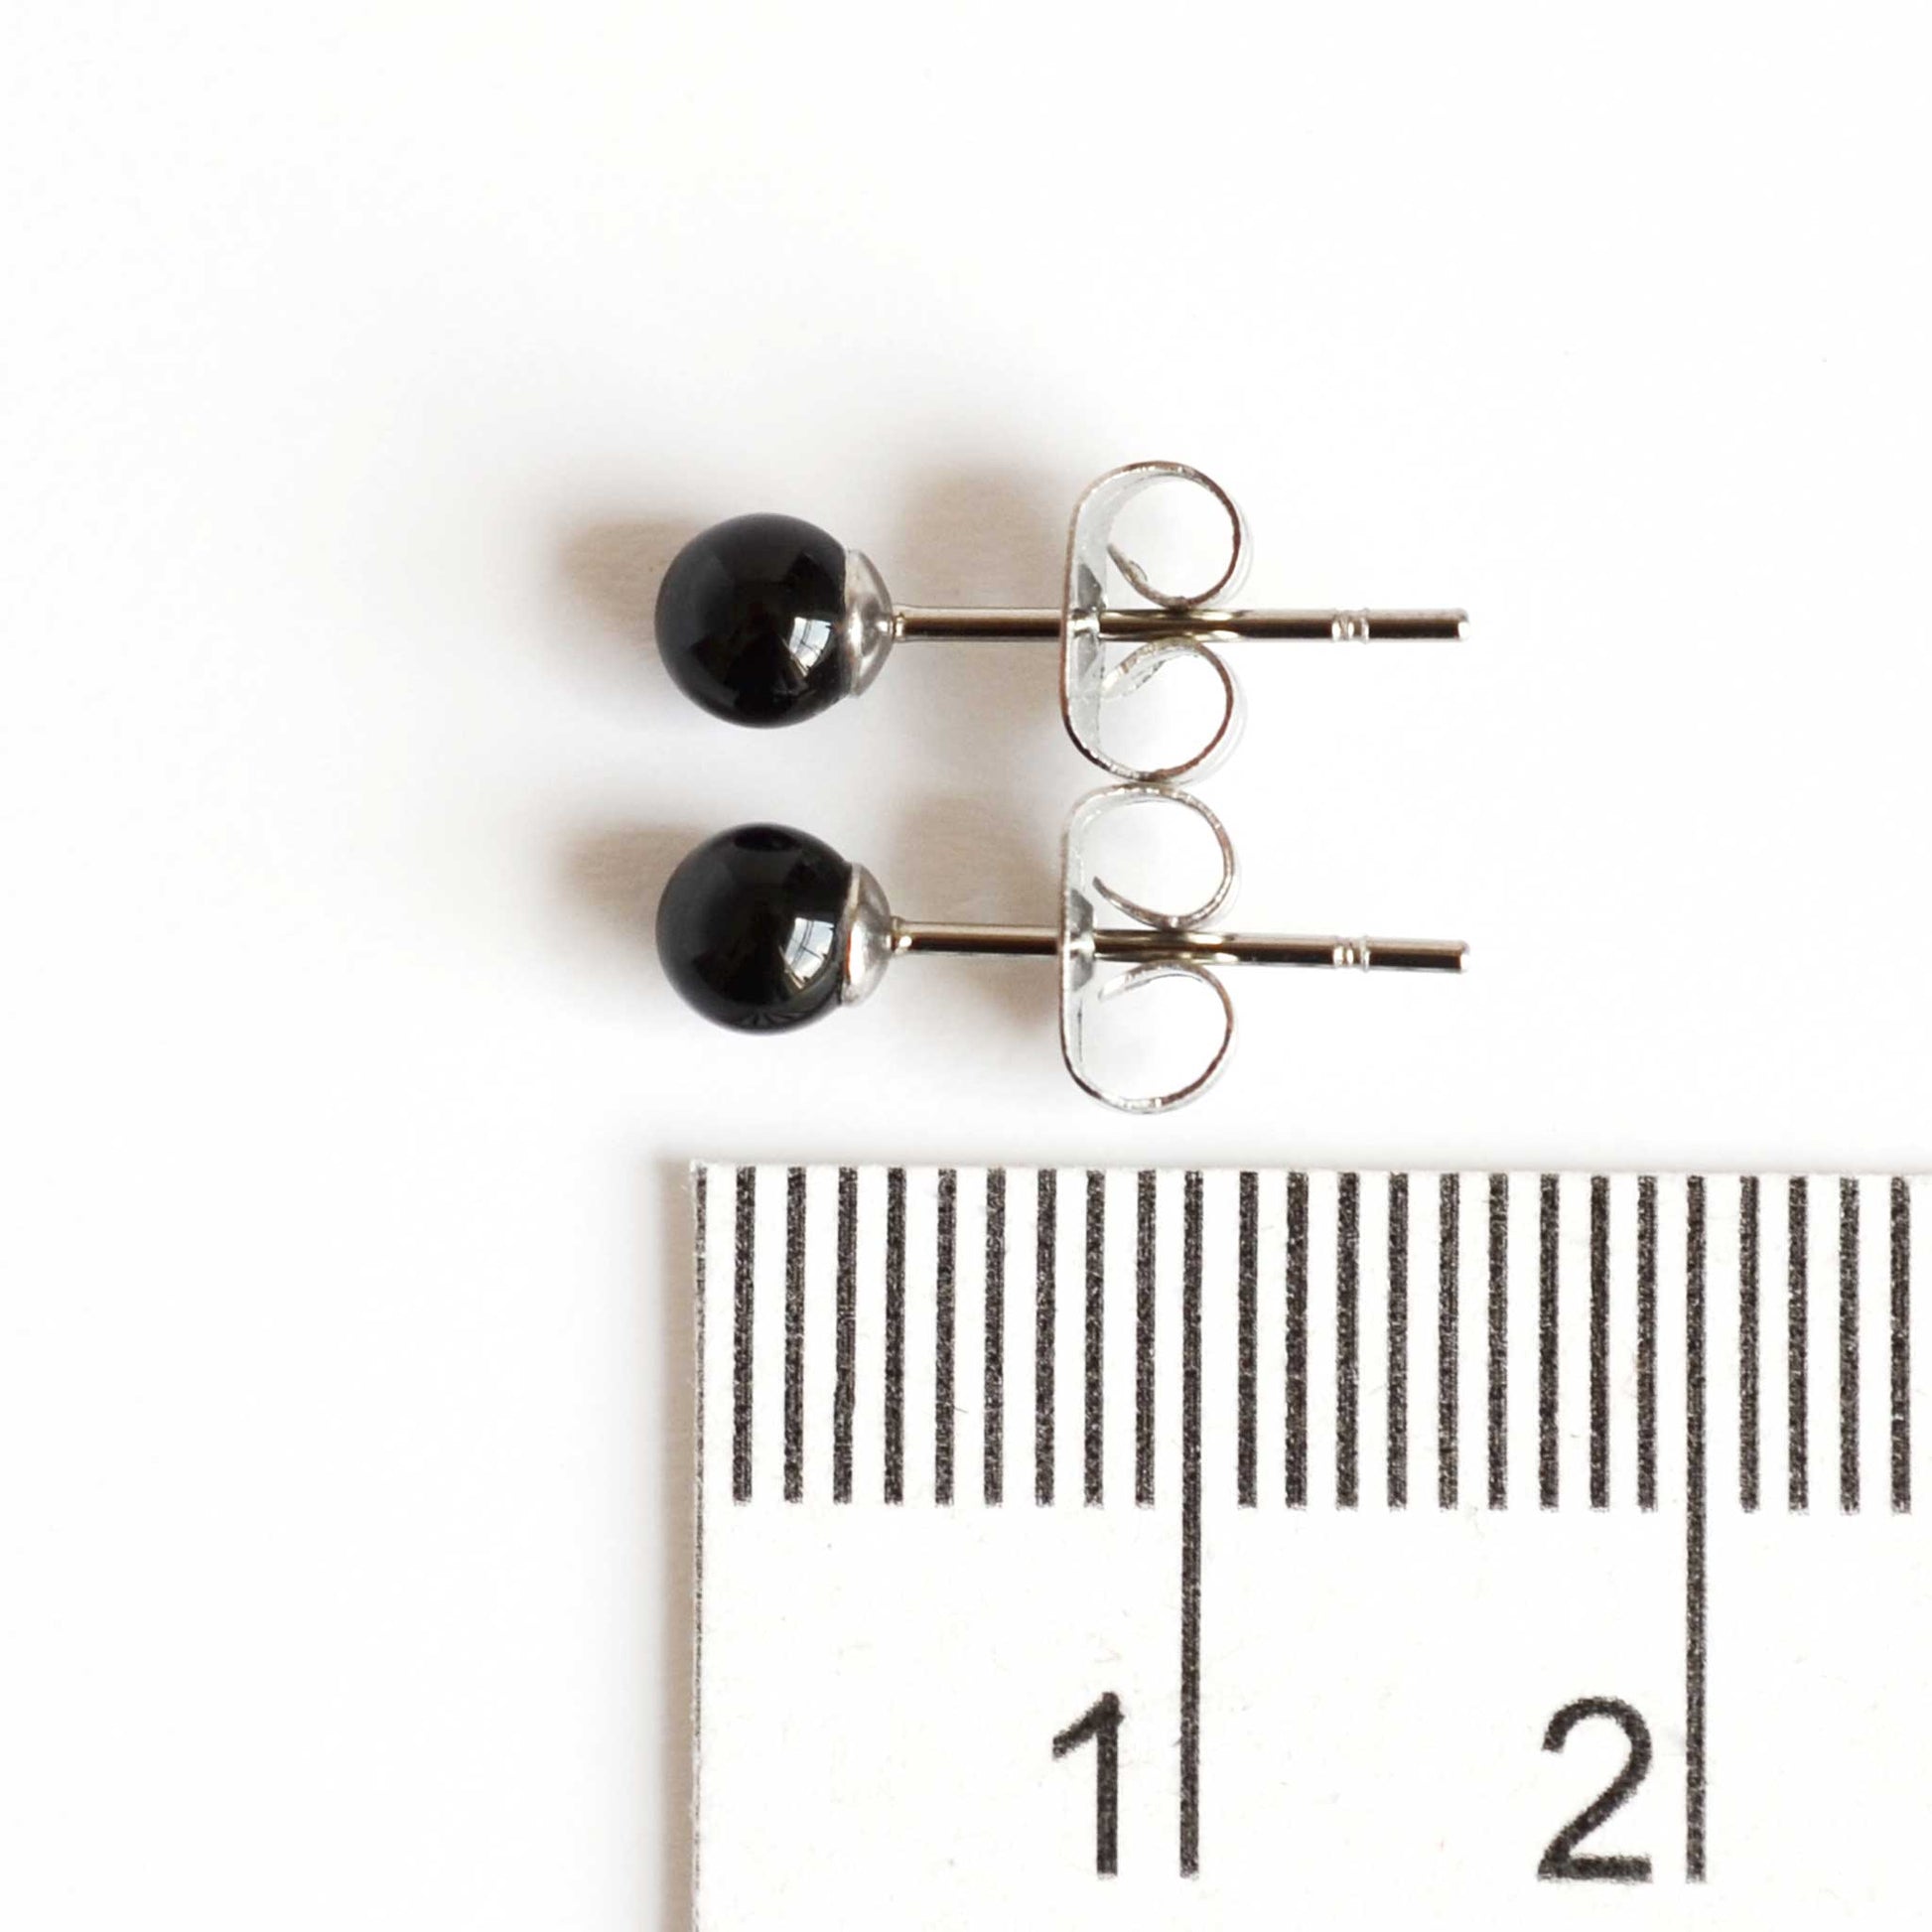 4mm Onyx stud earrings next to ruler